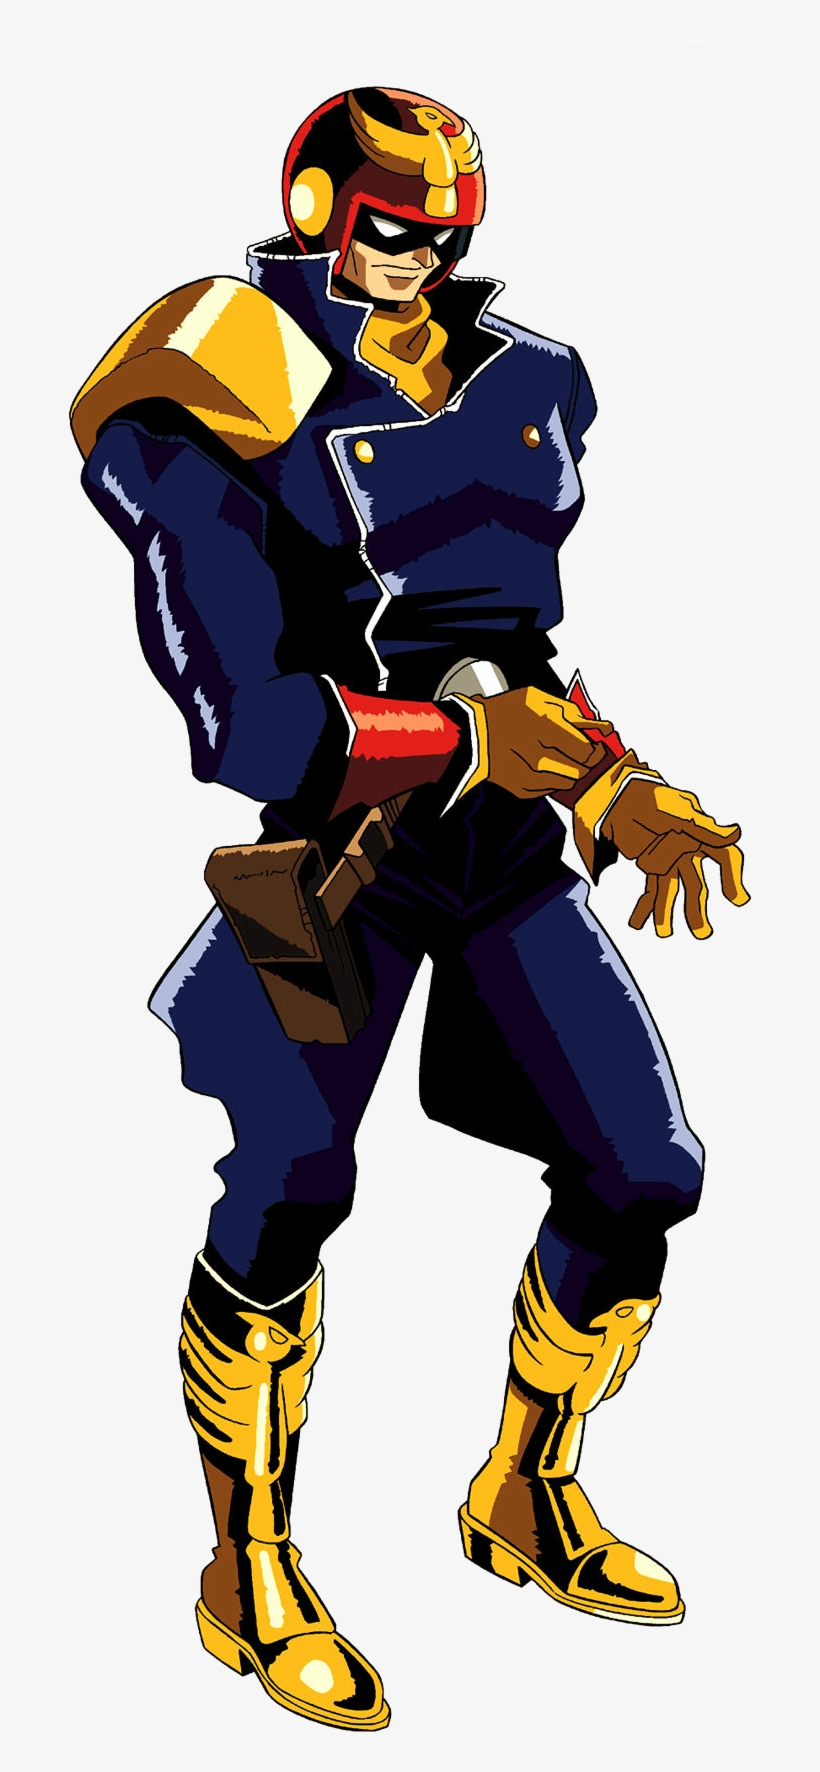 Captain Falcon - F Zero Anime Captain Falcon, transparent png #2021397